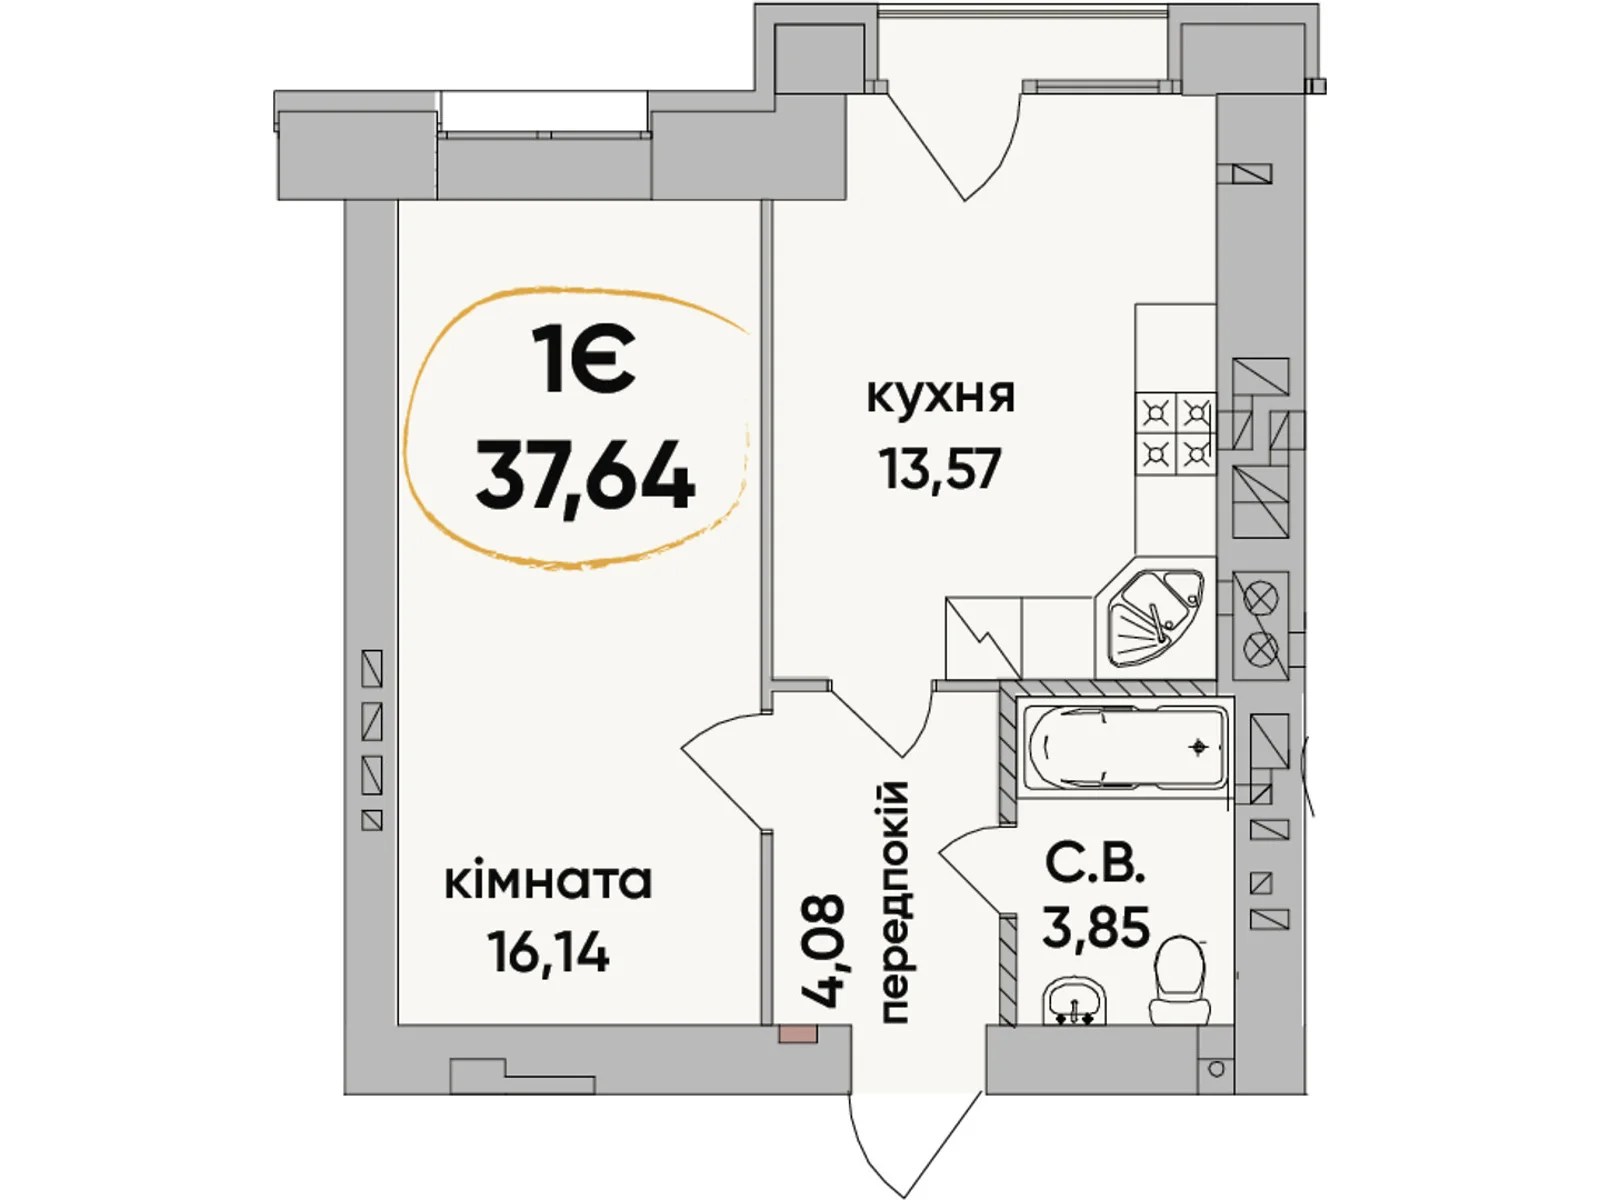 Продается 1-комнатная квартира 37.64 кв. м в Буче, ул. Ивана Кожедуба, 8 - фото 1